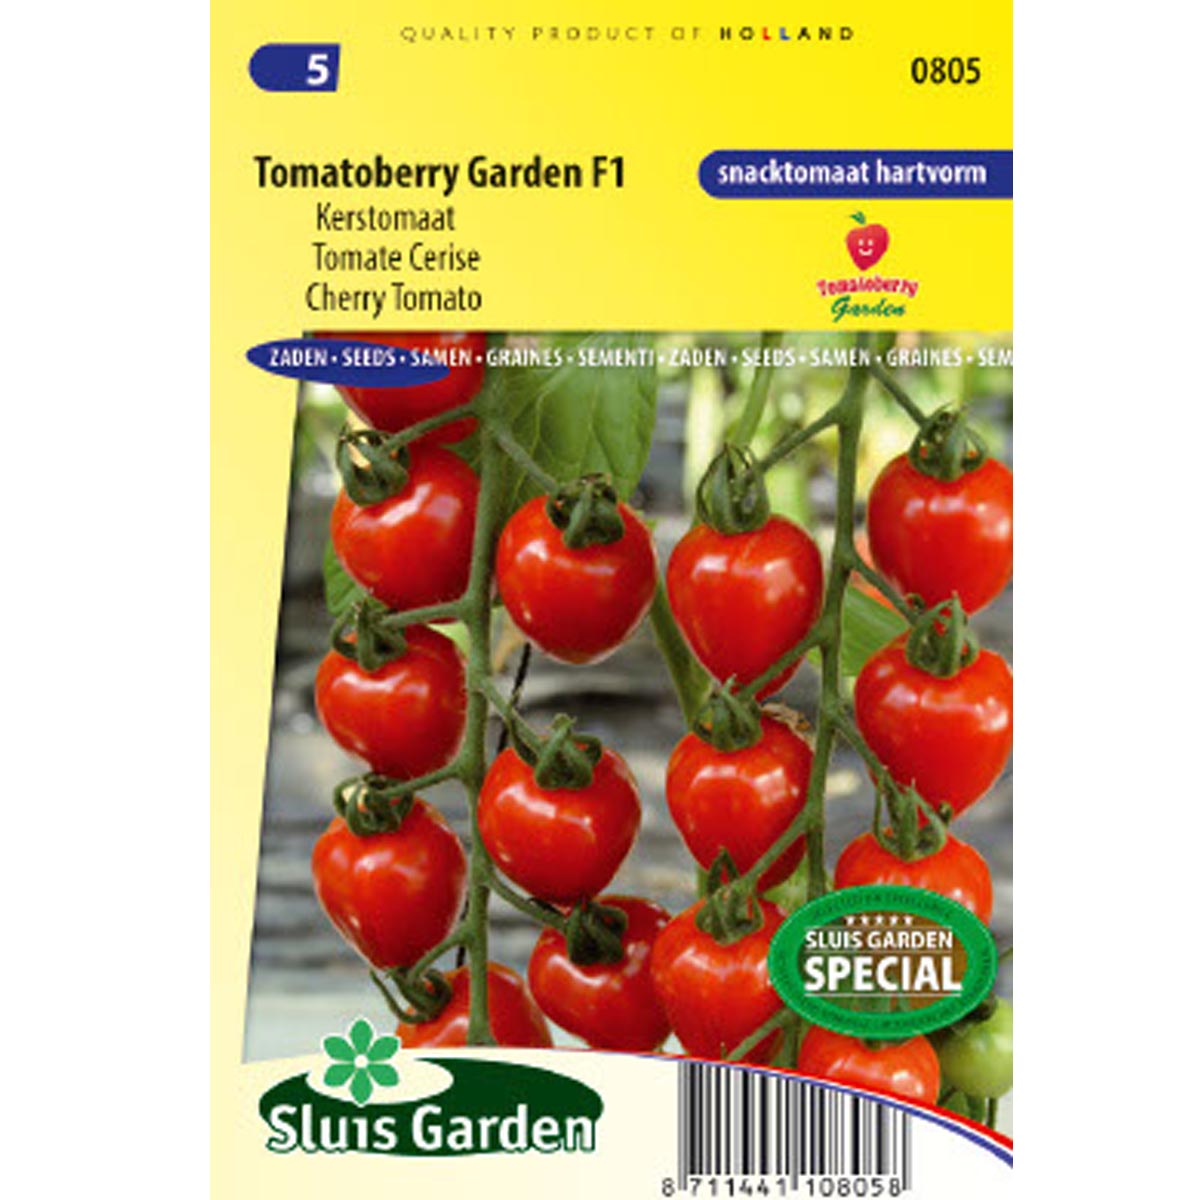 Tomate Gardenberry F1 - Tomate Cerise